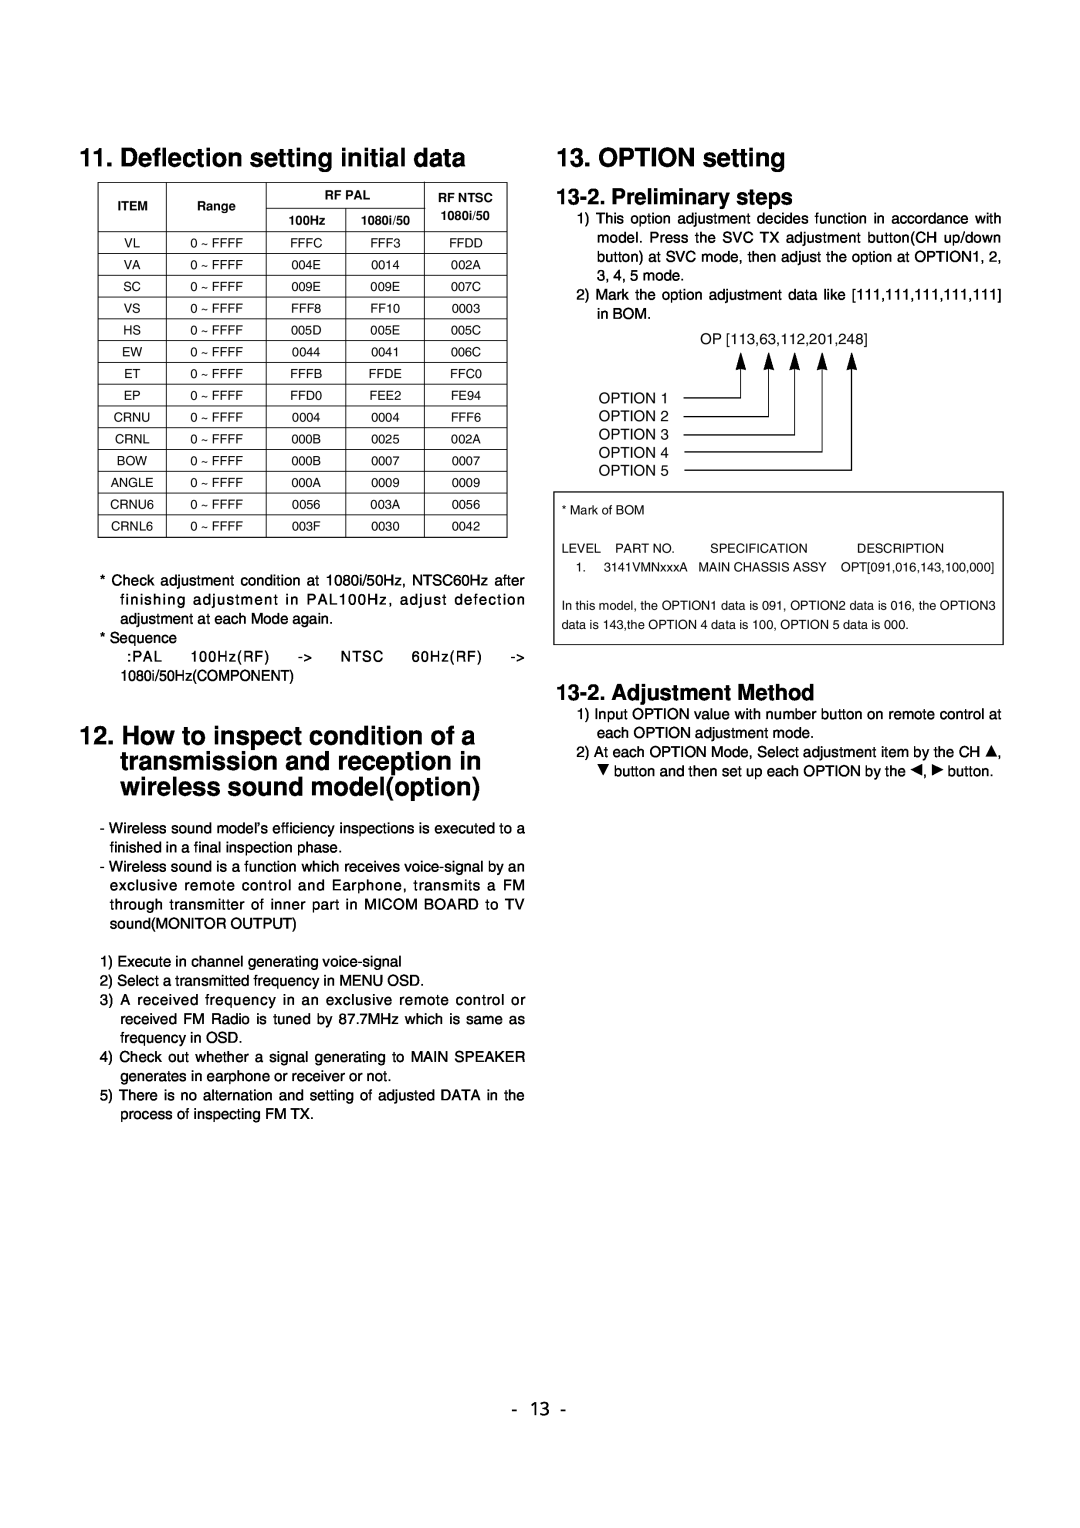 LG Electronics 29FS2AMB/ANX Deflection setting initial data, OPTION setting, Preliminary steps, Adjustment Method 